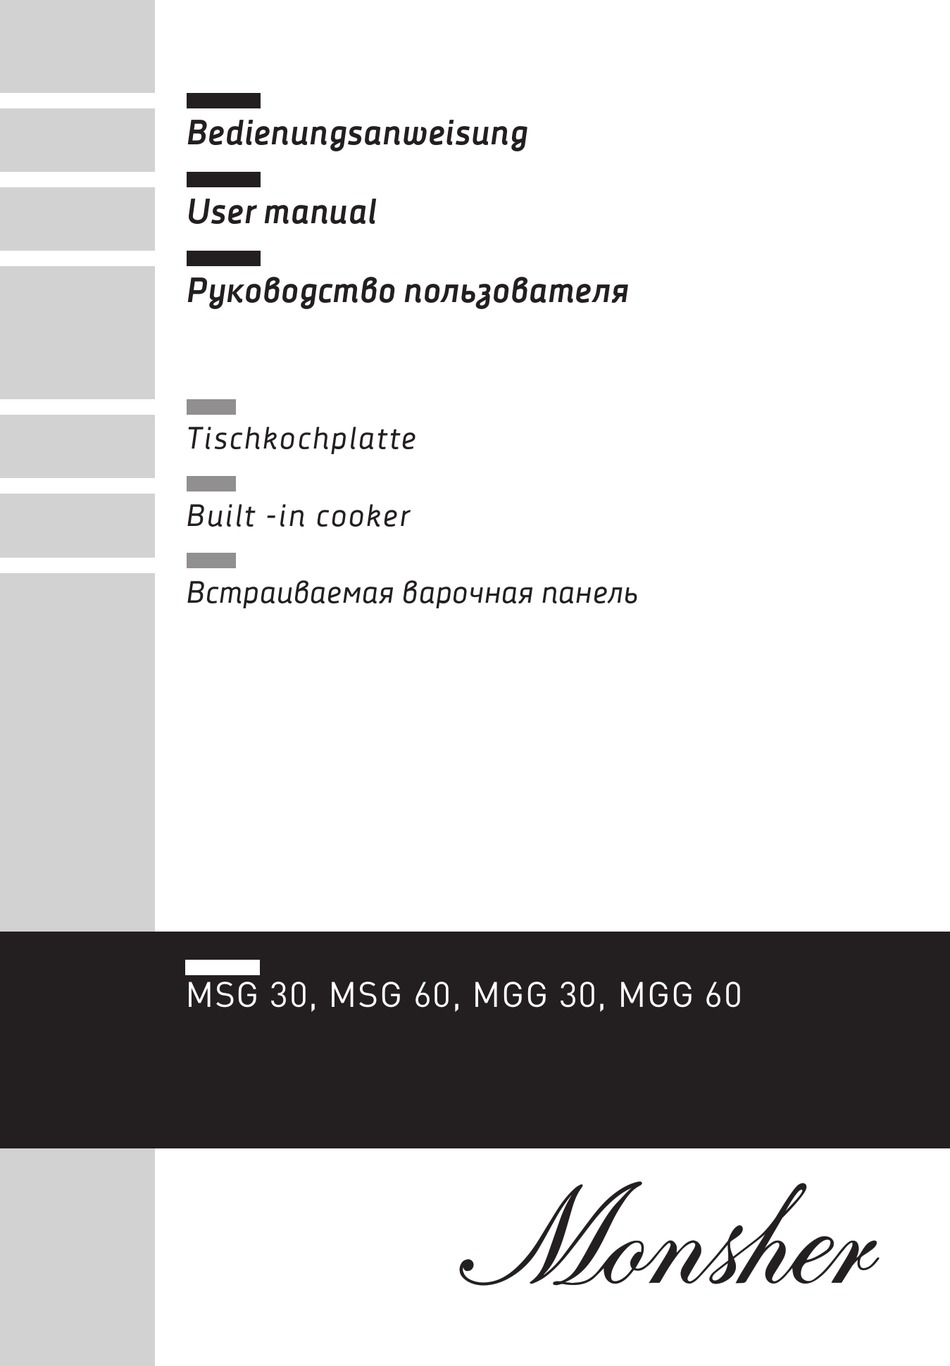 MONSHER MSG 30 USER MANUAL Pdf Download | ManualsLib